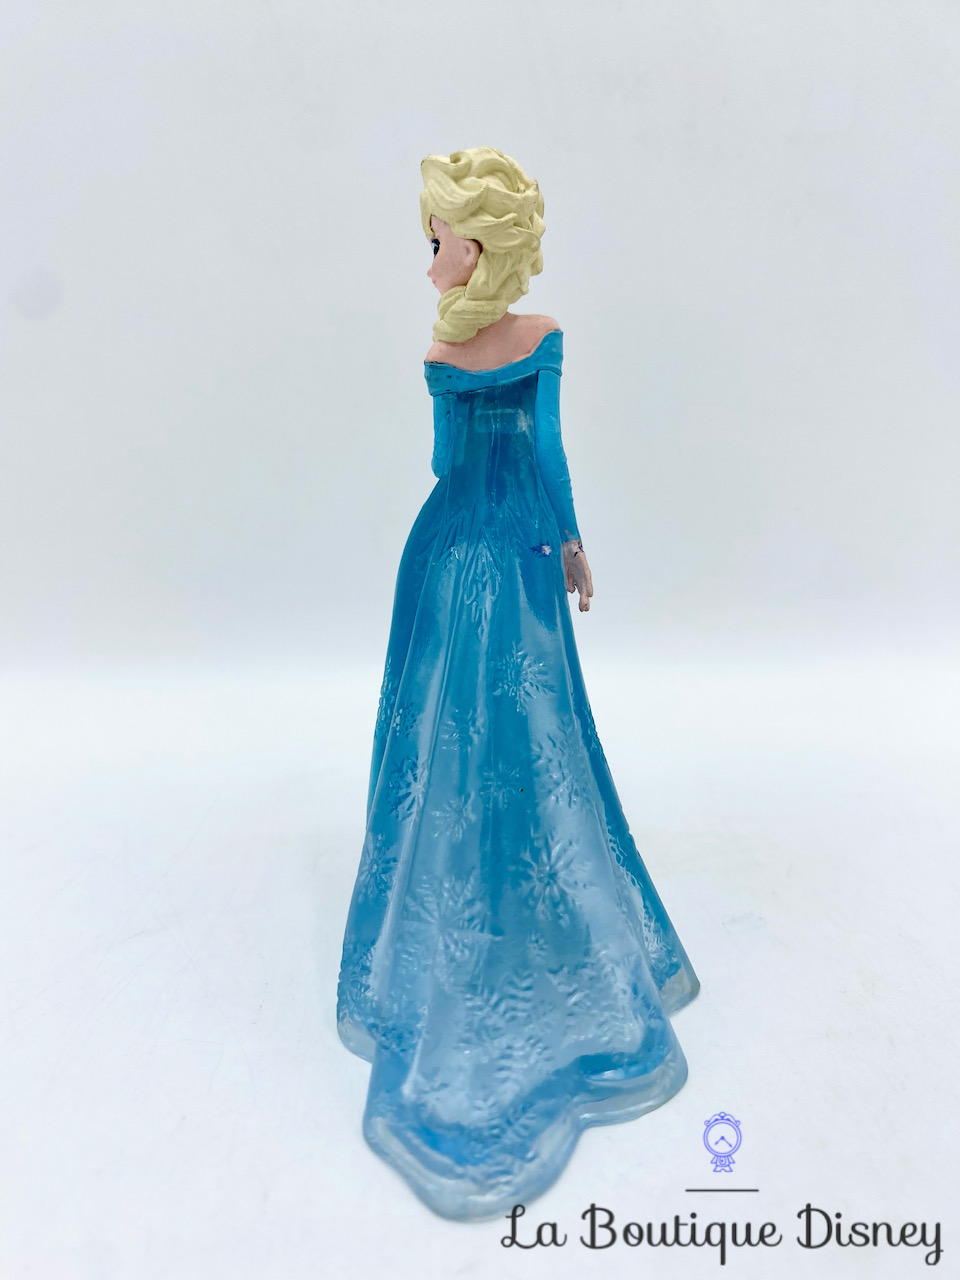 figurine-elsa-la-reine-des-neiges-disney-bullyland-robe-bleue-4